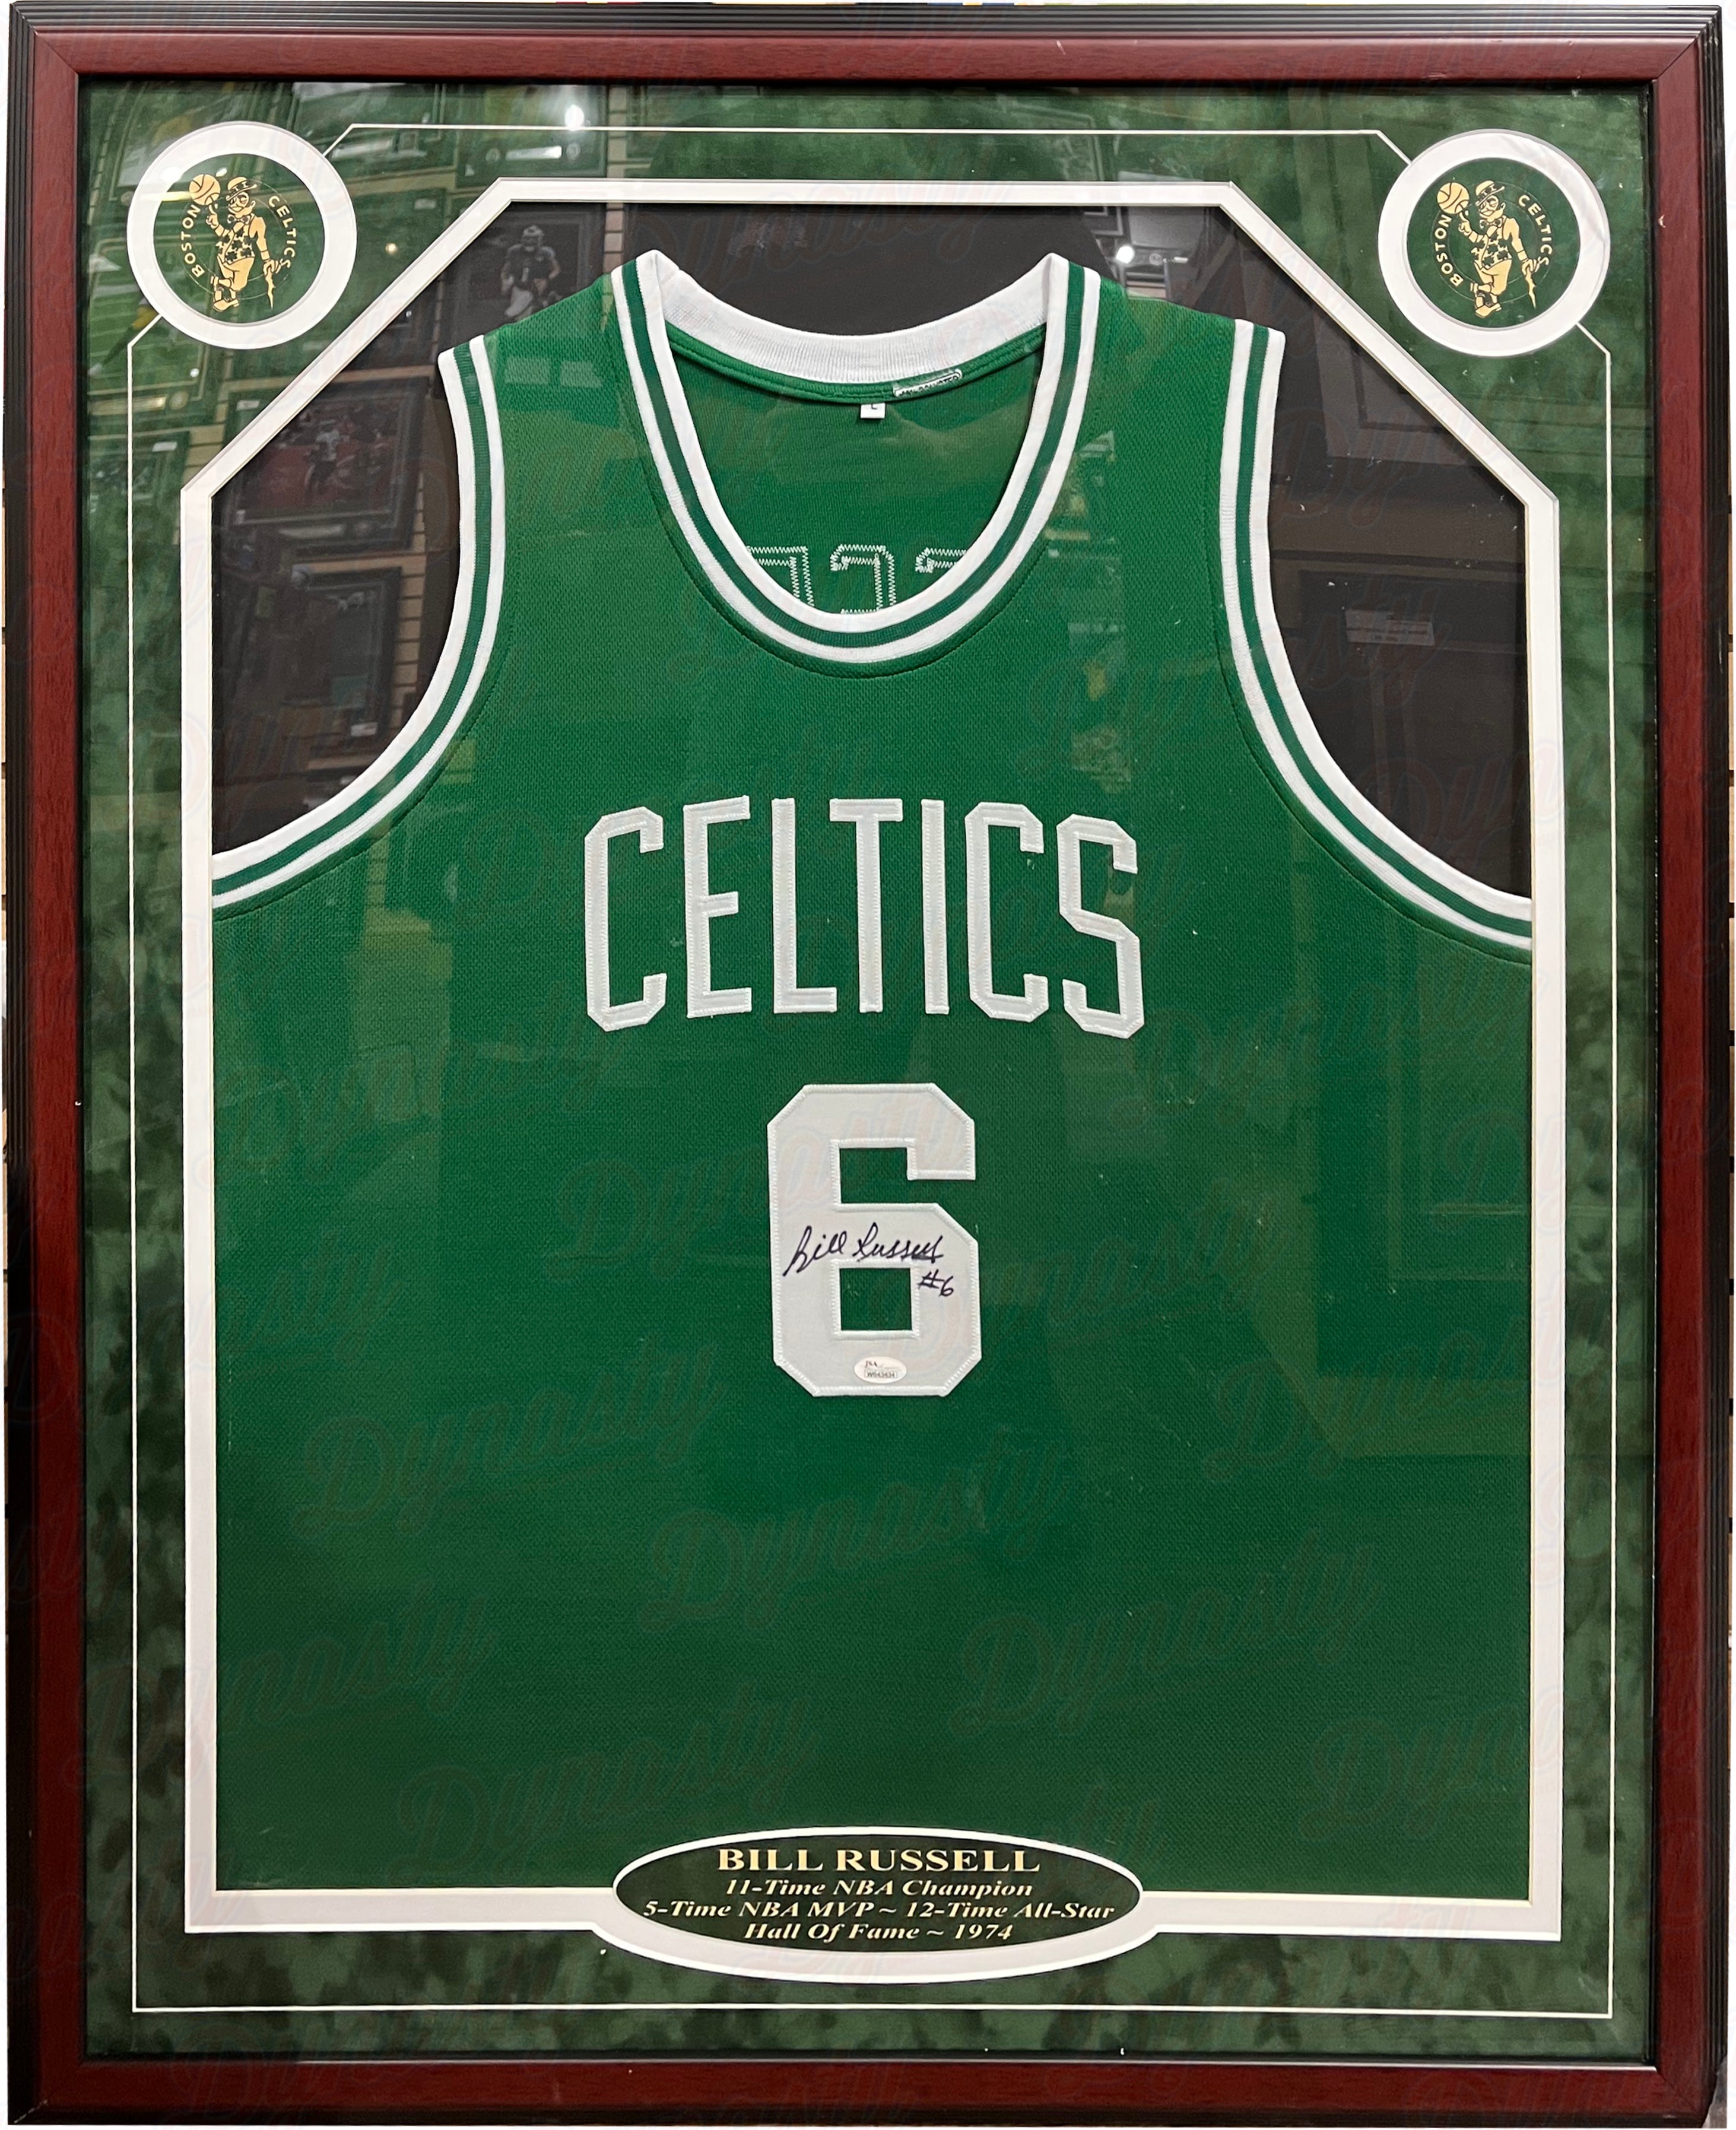 Boston Celtics, NBA Jerseys